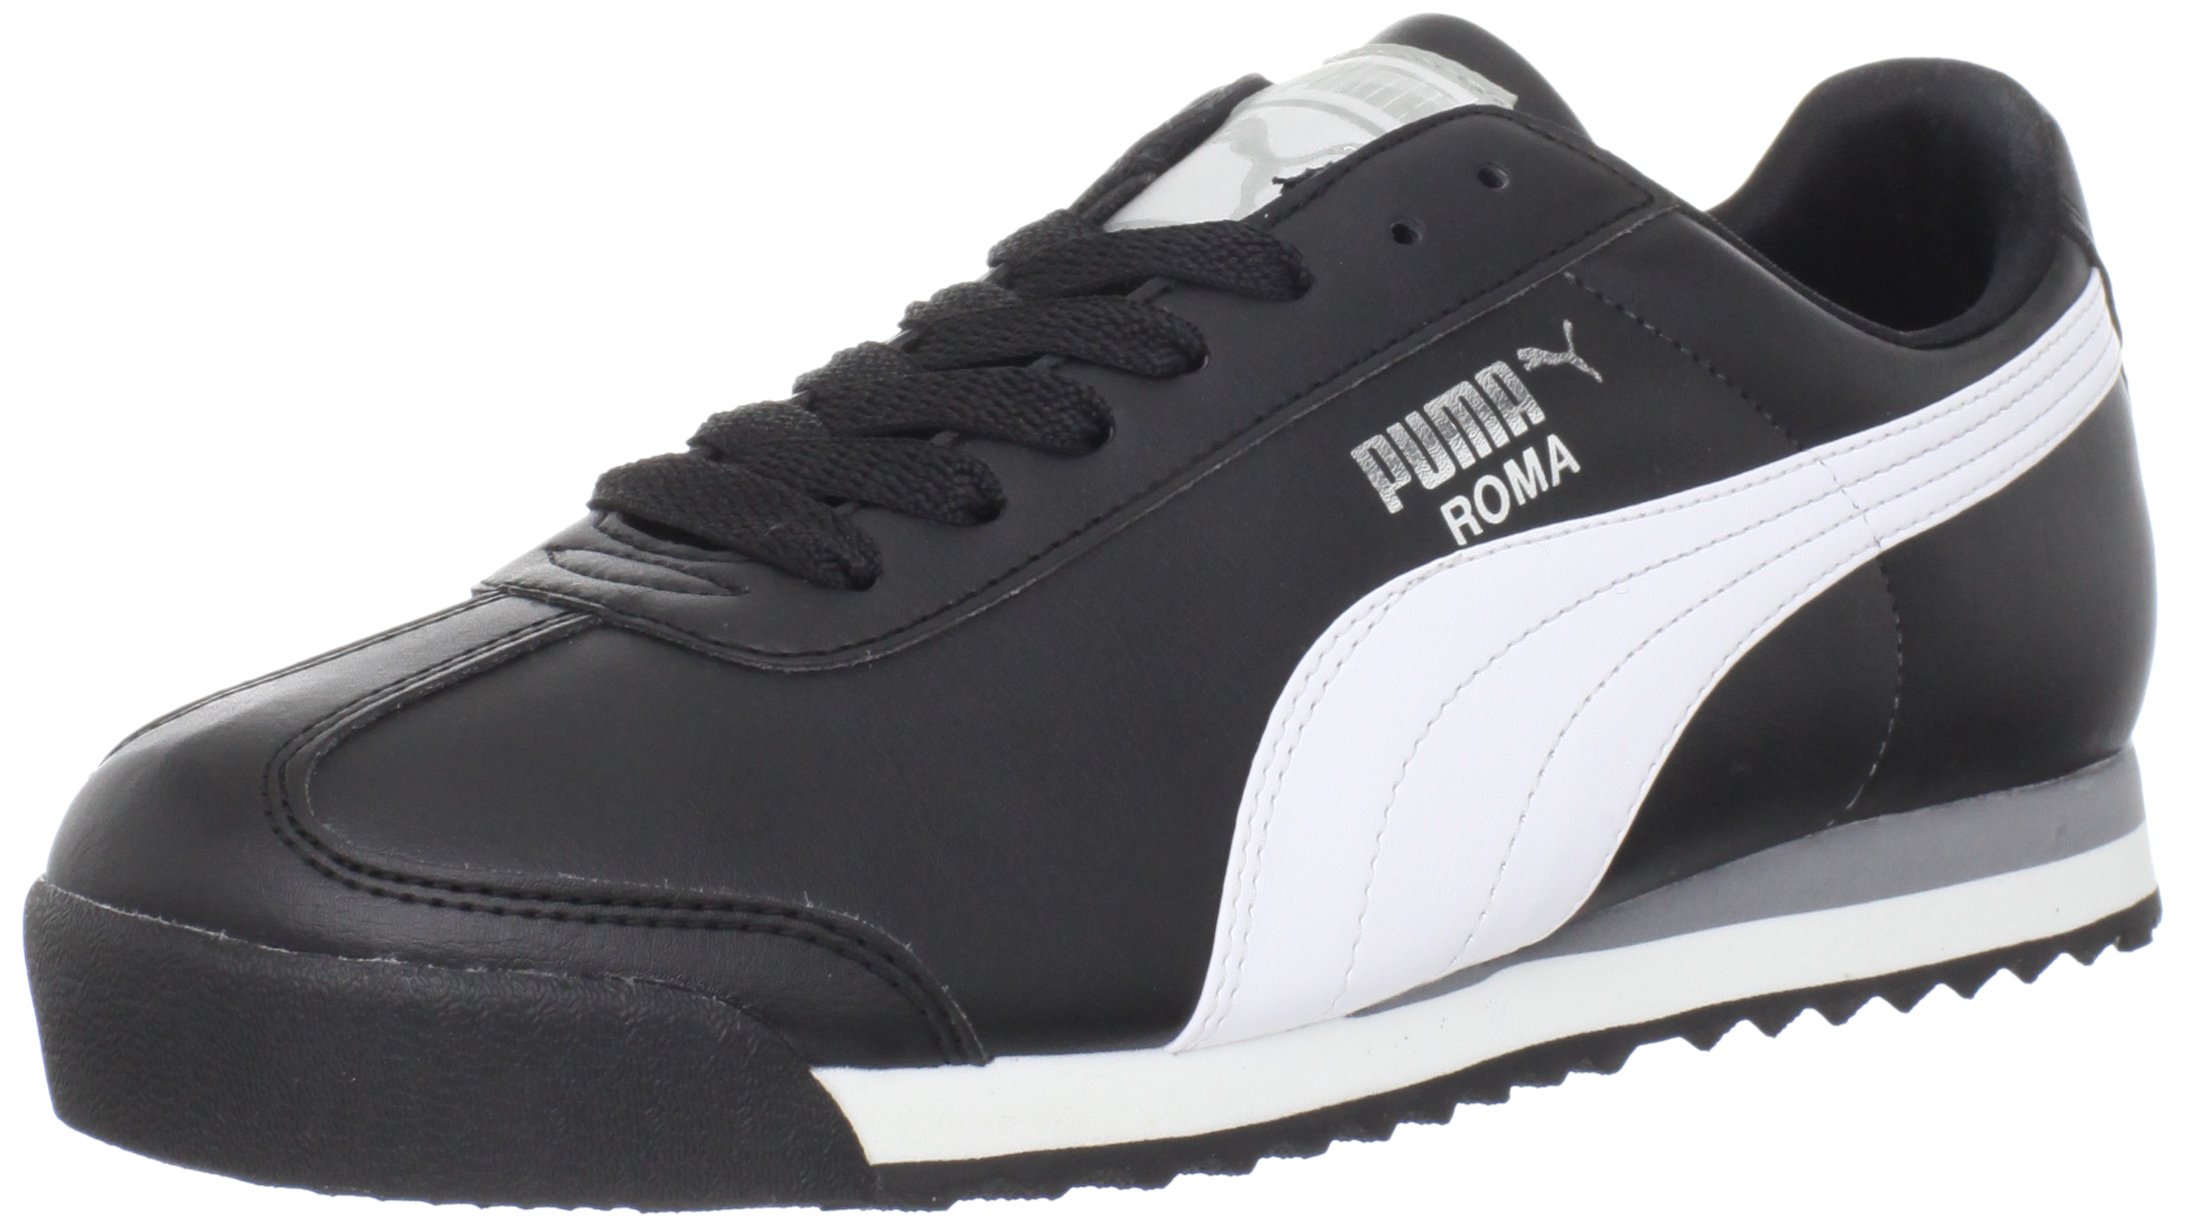 Puma Roma Basic Men's Shoes Black/White/Puma Sliver 353572-11 - image 1 of 7